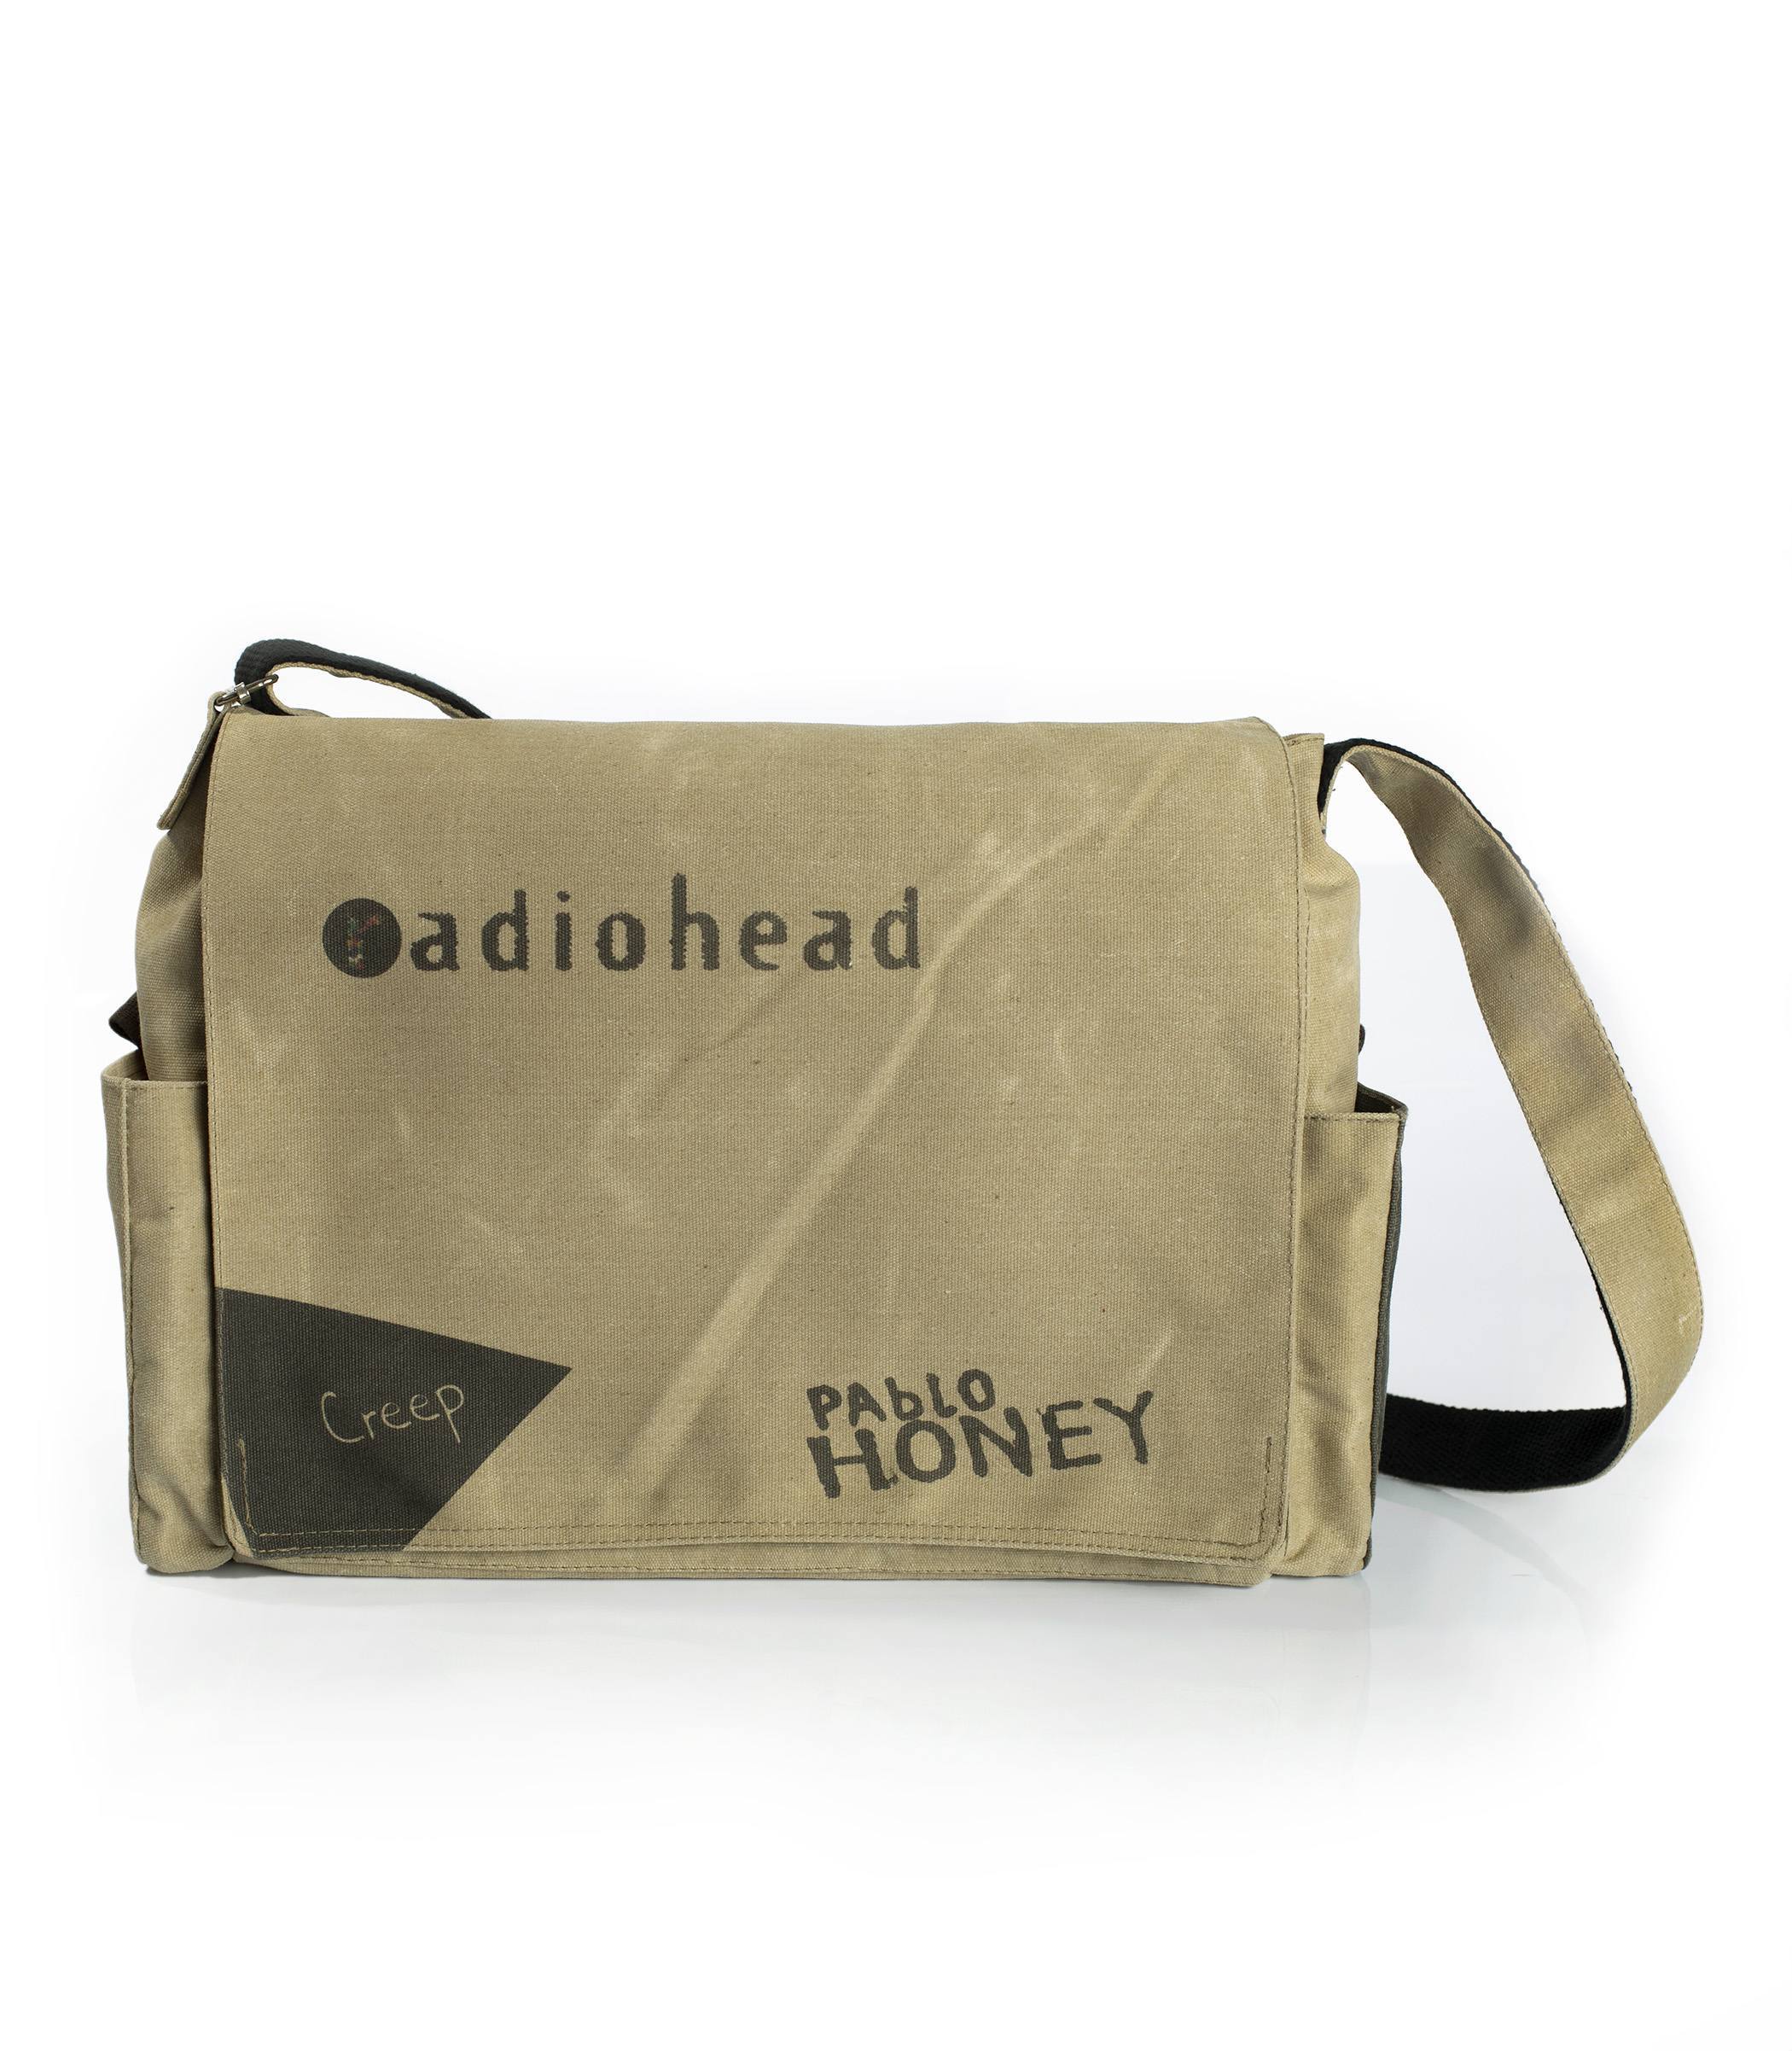 waxed-canvas-cross-bag-radiohead-pablo-honey-album-artwork